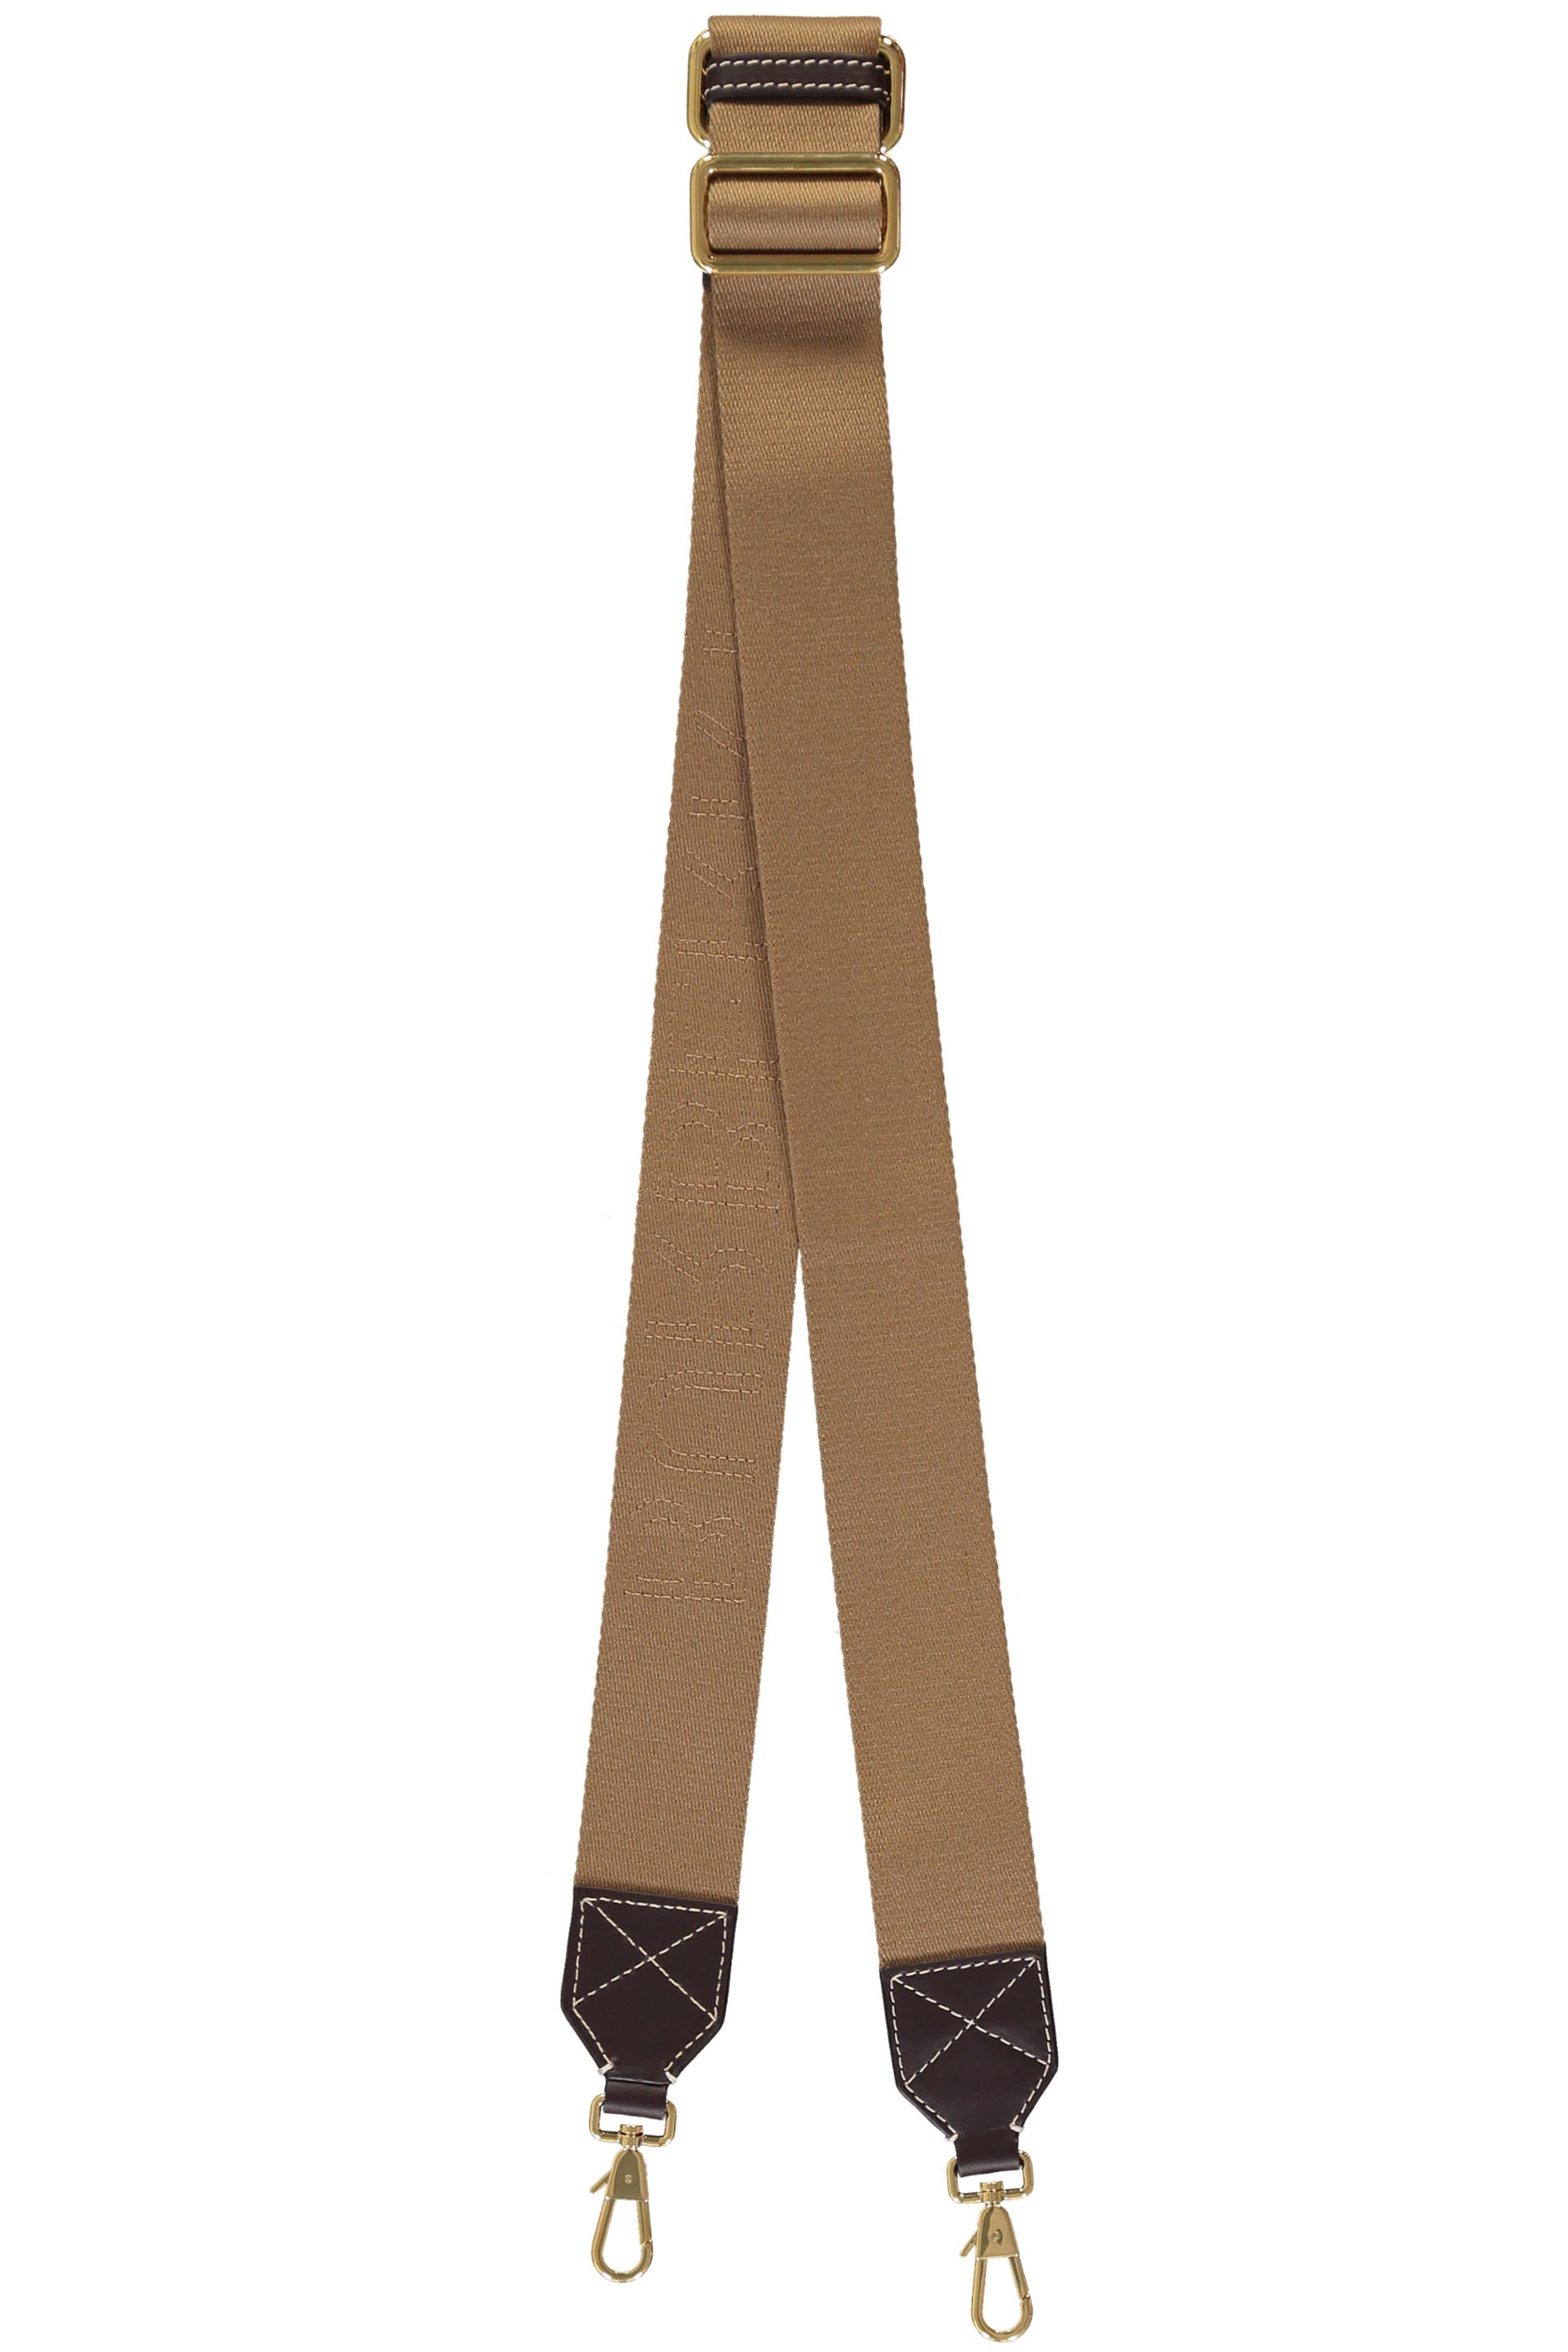 Adjustable and removable fabric shoulder strap-Burberry-OUTLET-SALE-TU-ARCHIVIST